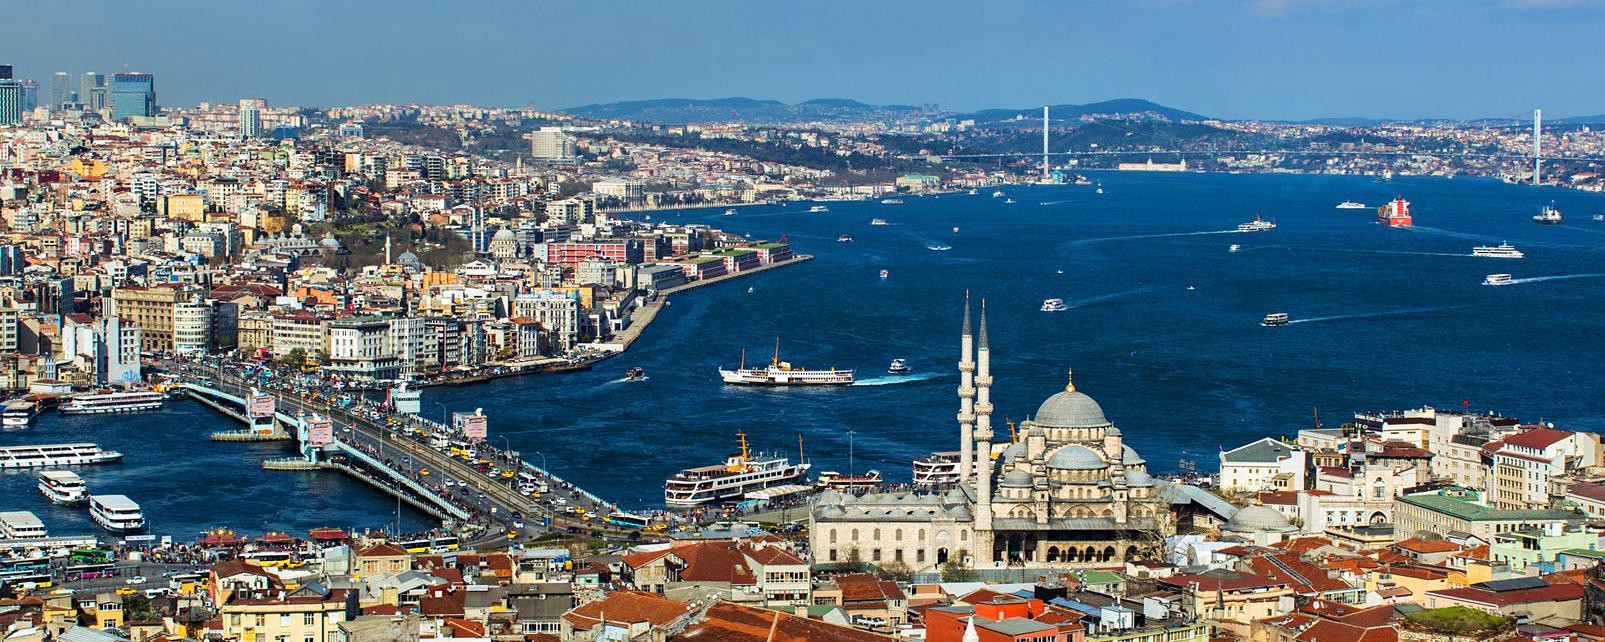 Turkey Istanbul 2020